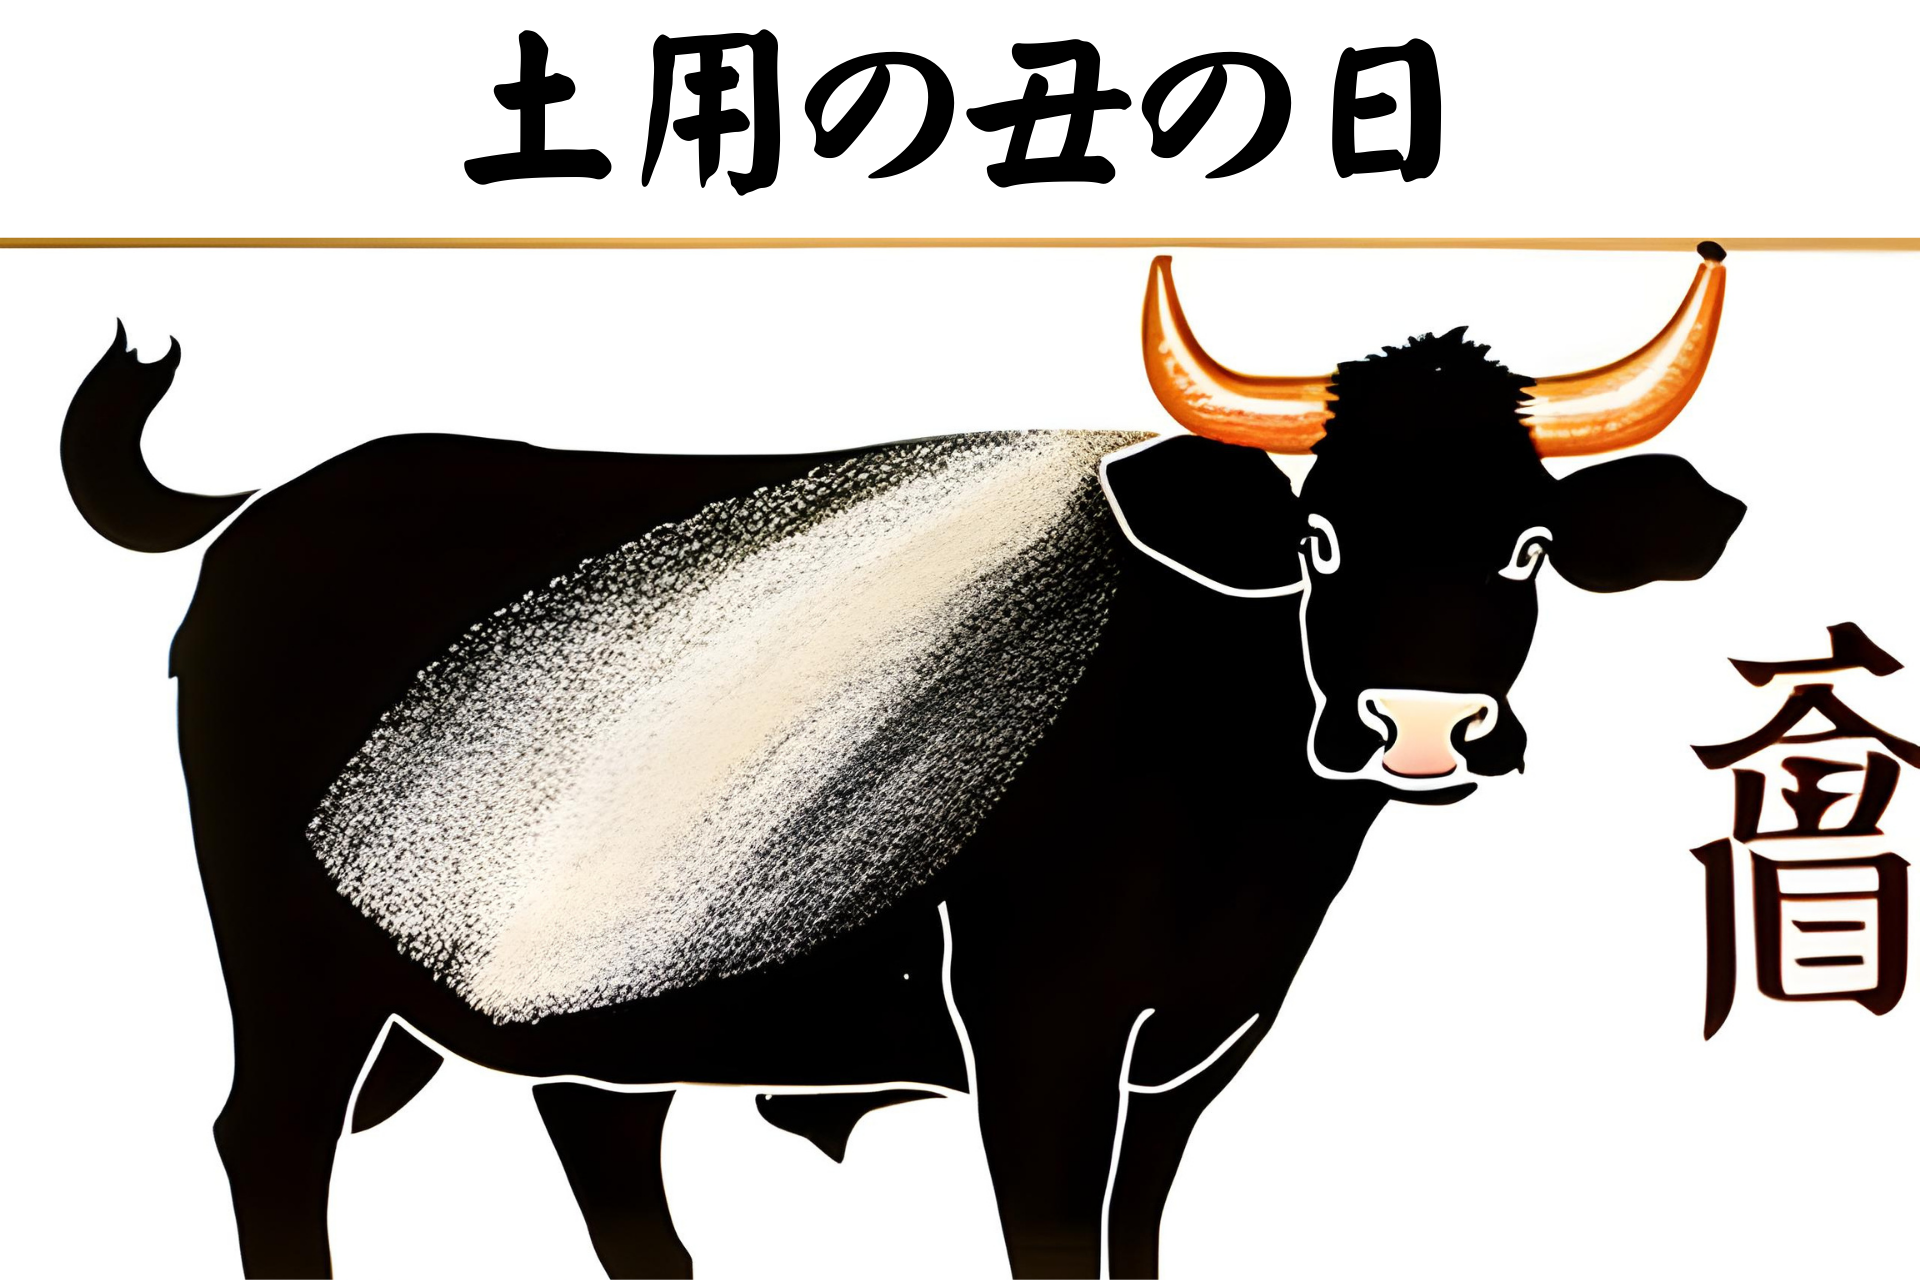 Kuh steht unter dem Kanji 土用の丑の日